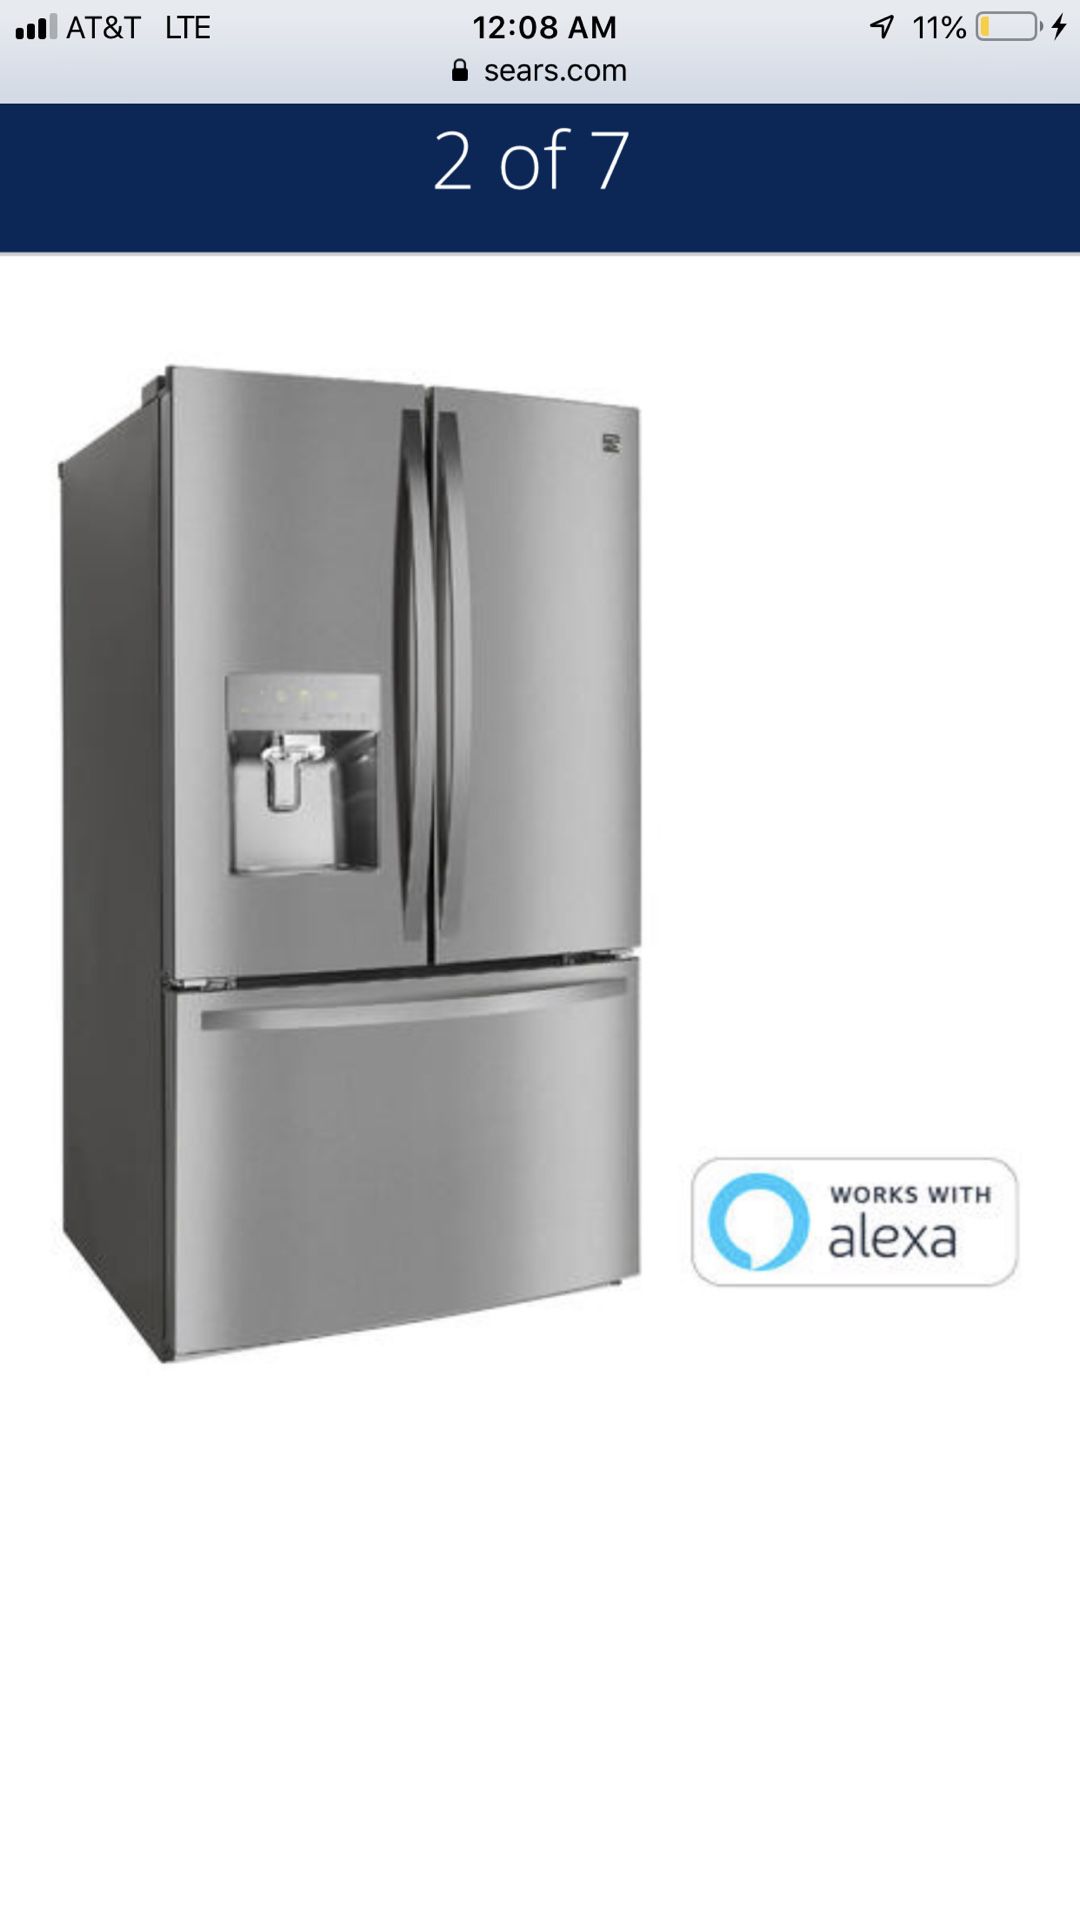 ***BRAND NEW***Kenmore 73105 27.9 cu. ft. Smart French Door Fingerprint Resistant Refrigerator - Stainless Steel